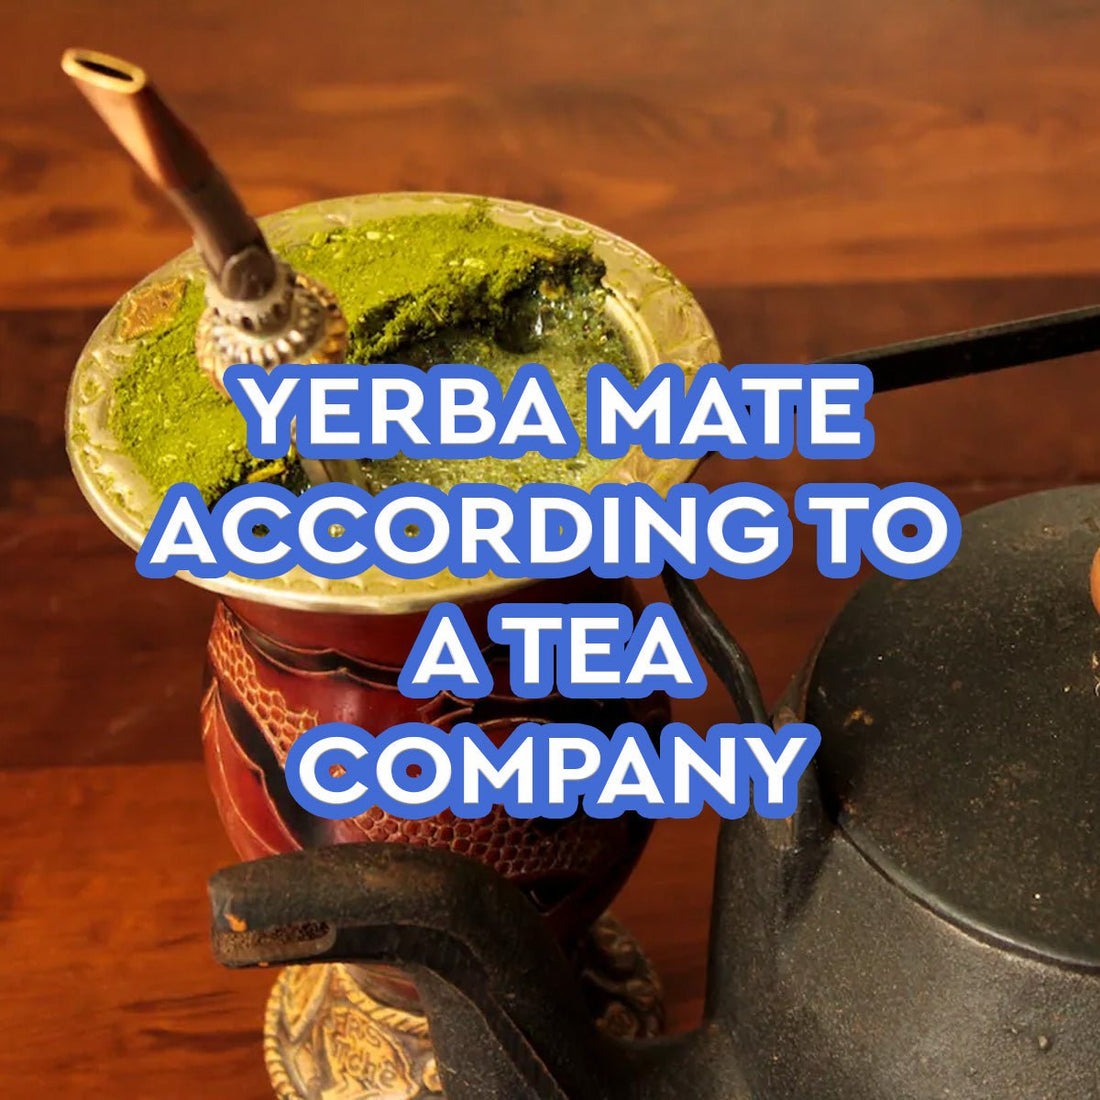 Yerba mate according to a tea company - Chanui